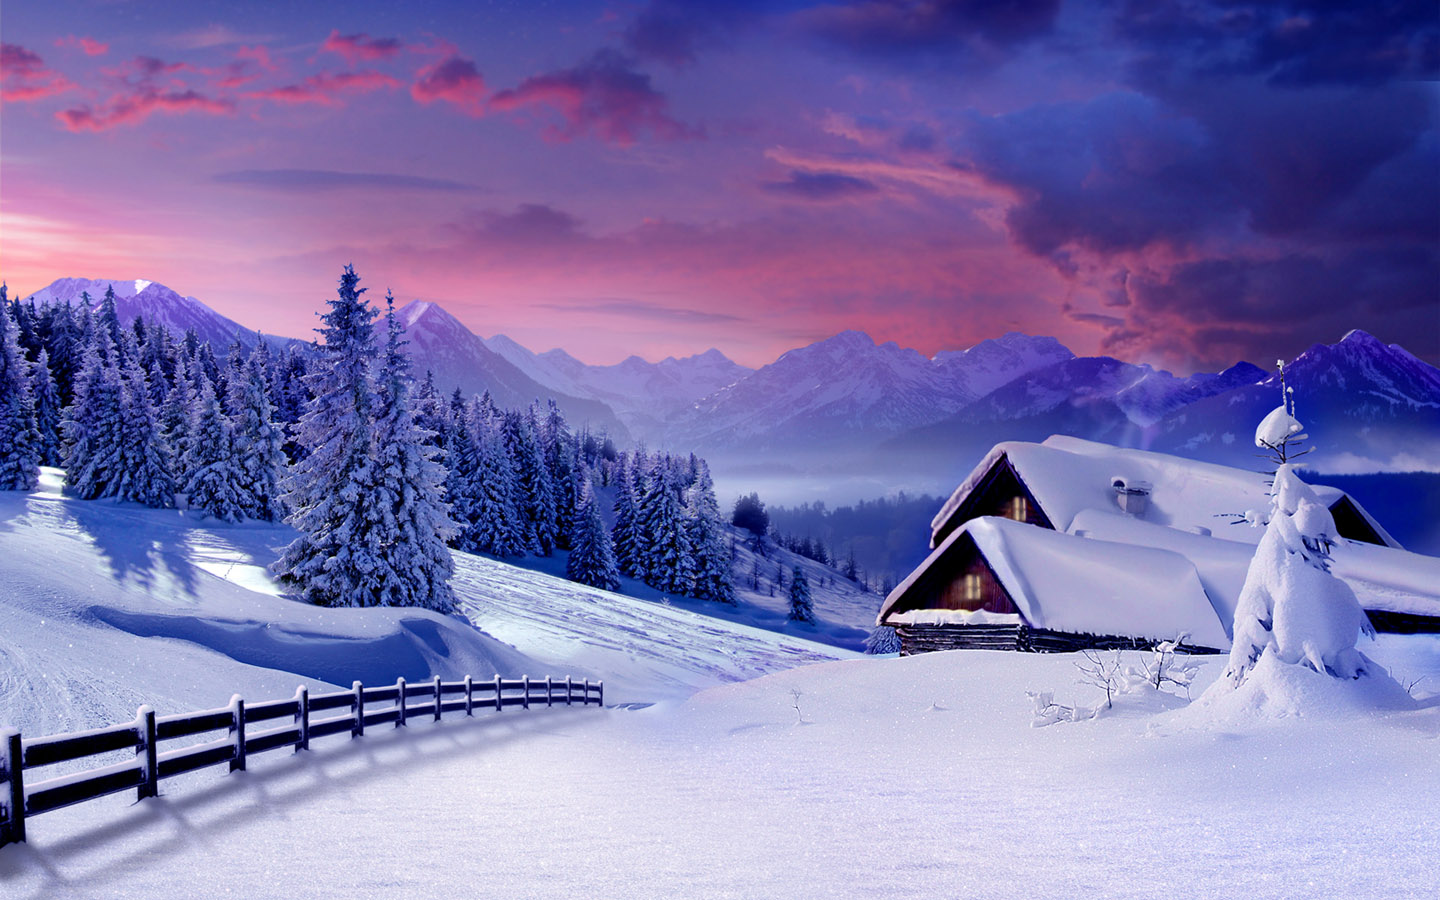 The hut landscape wallpaper in the snow